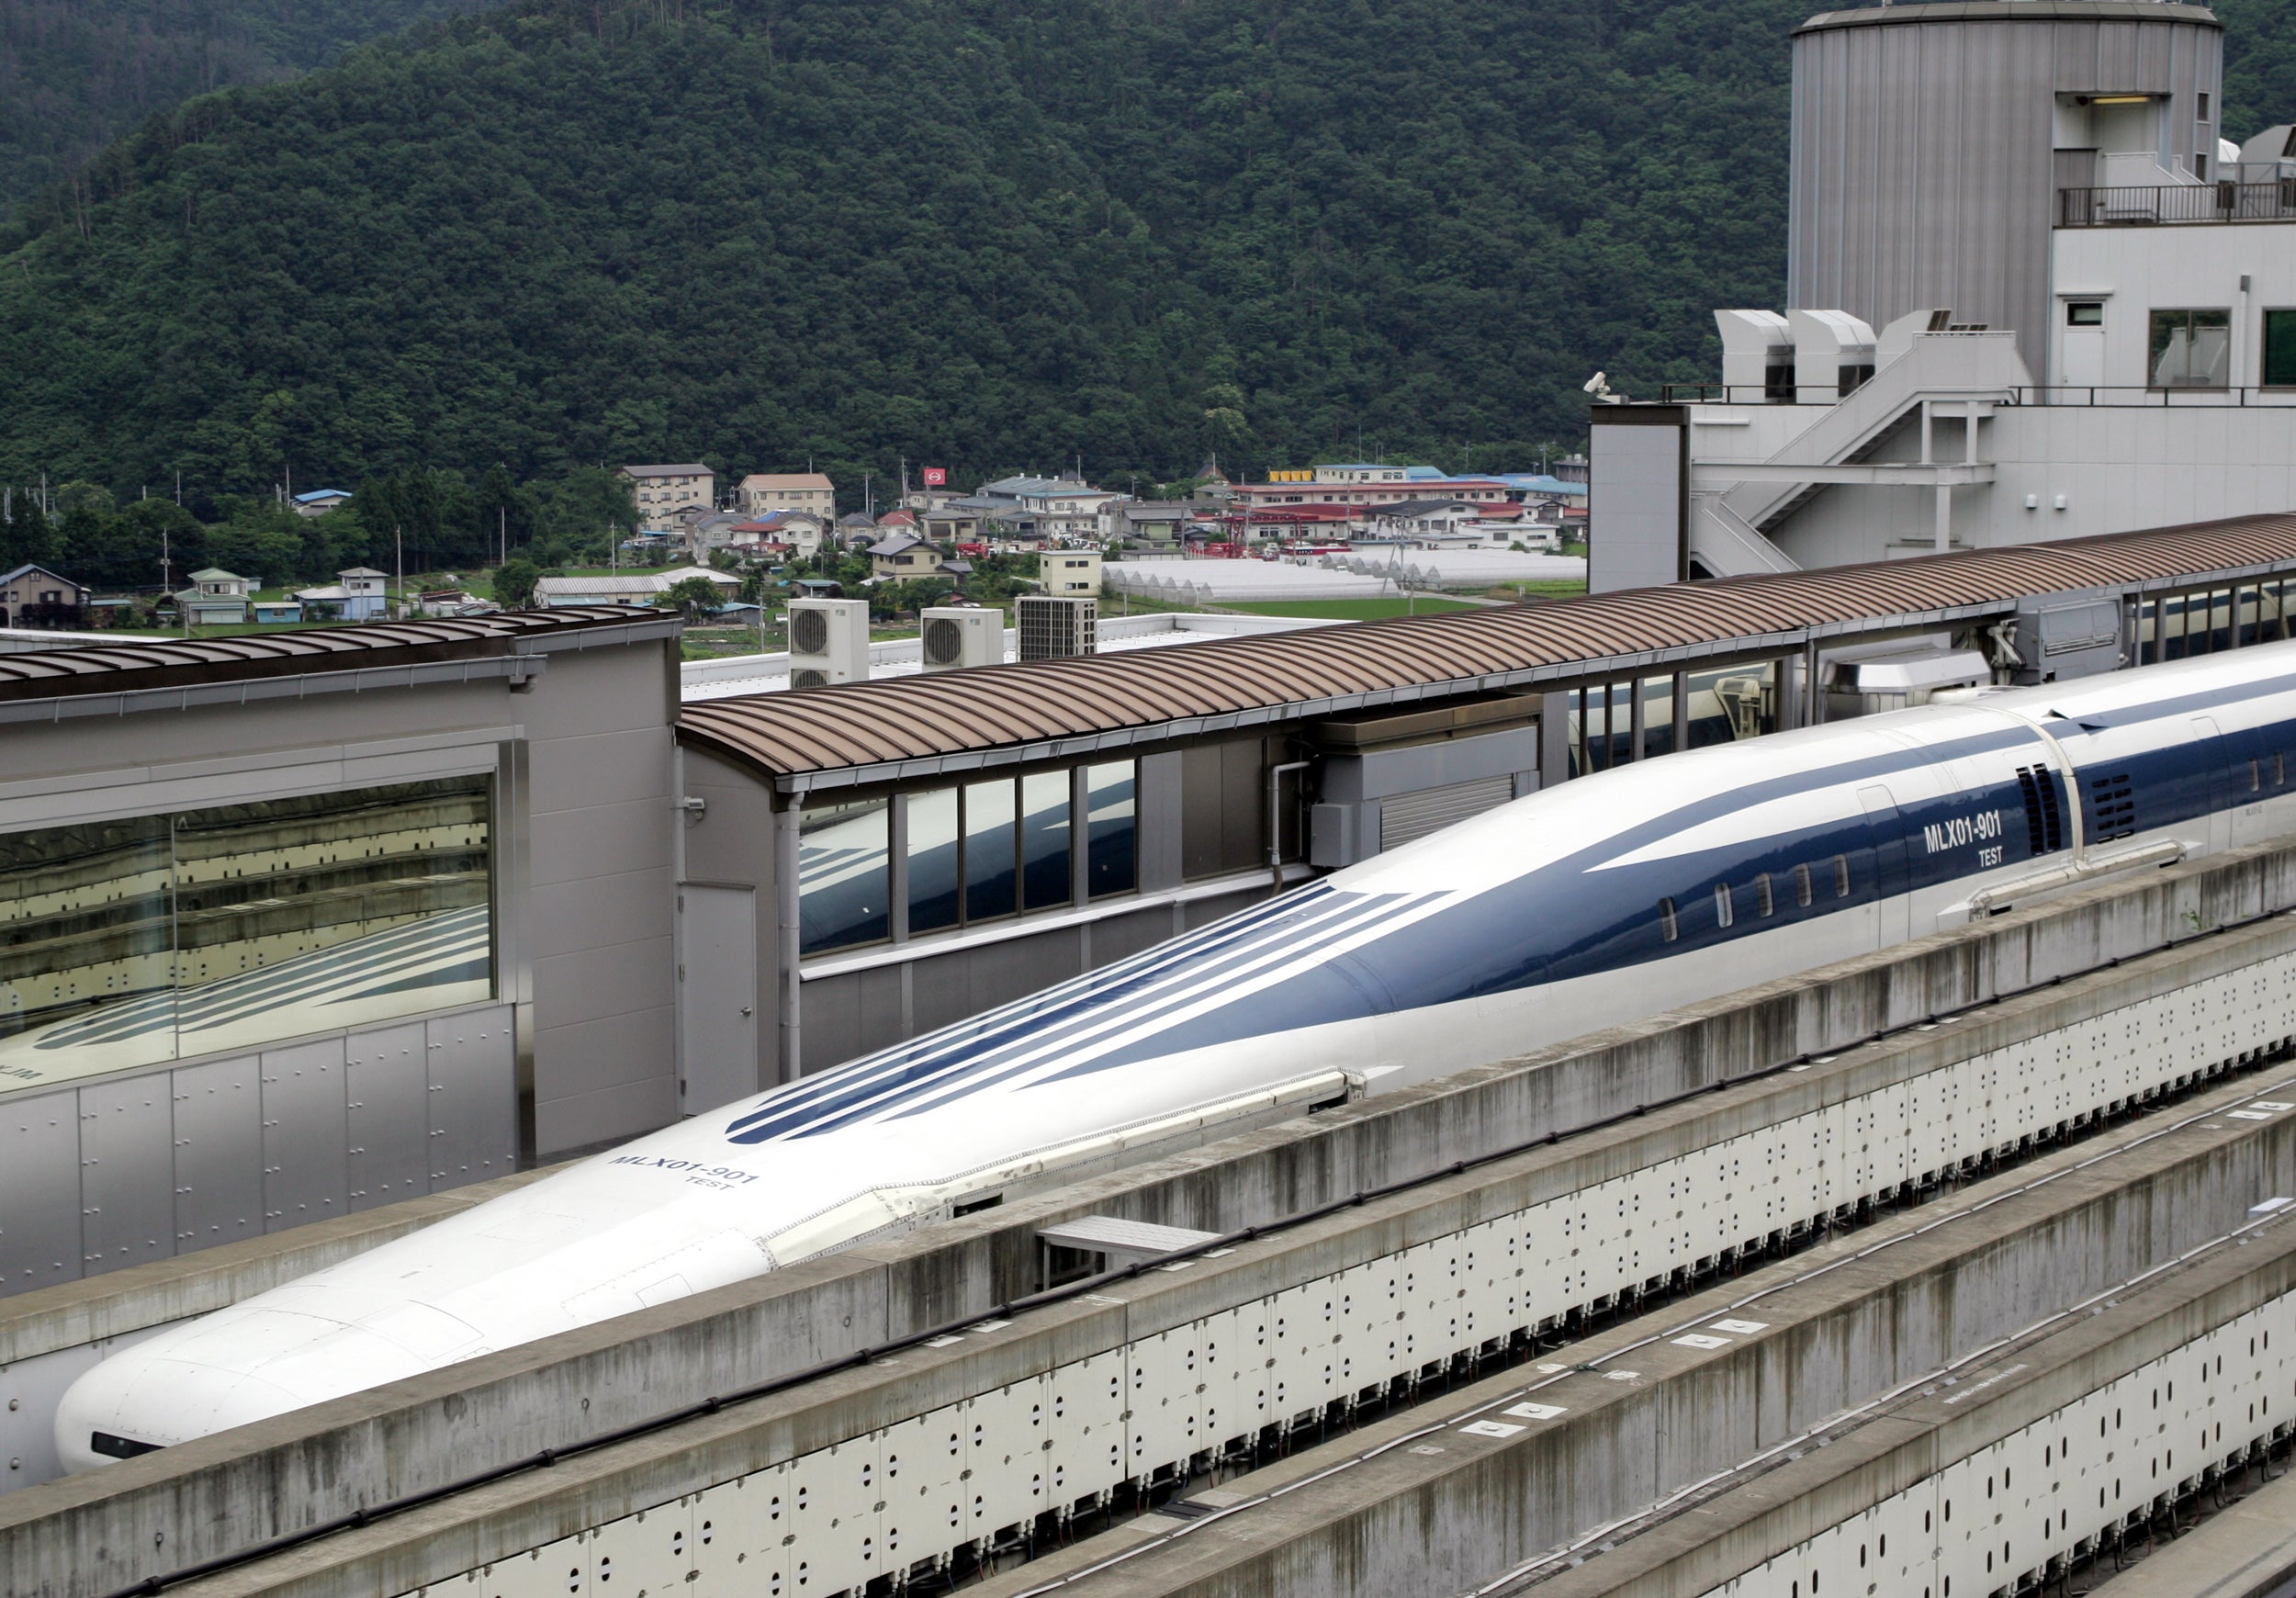 The new maglev bullet train in Japan